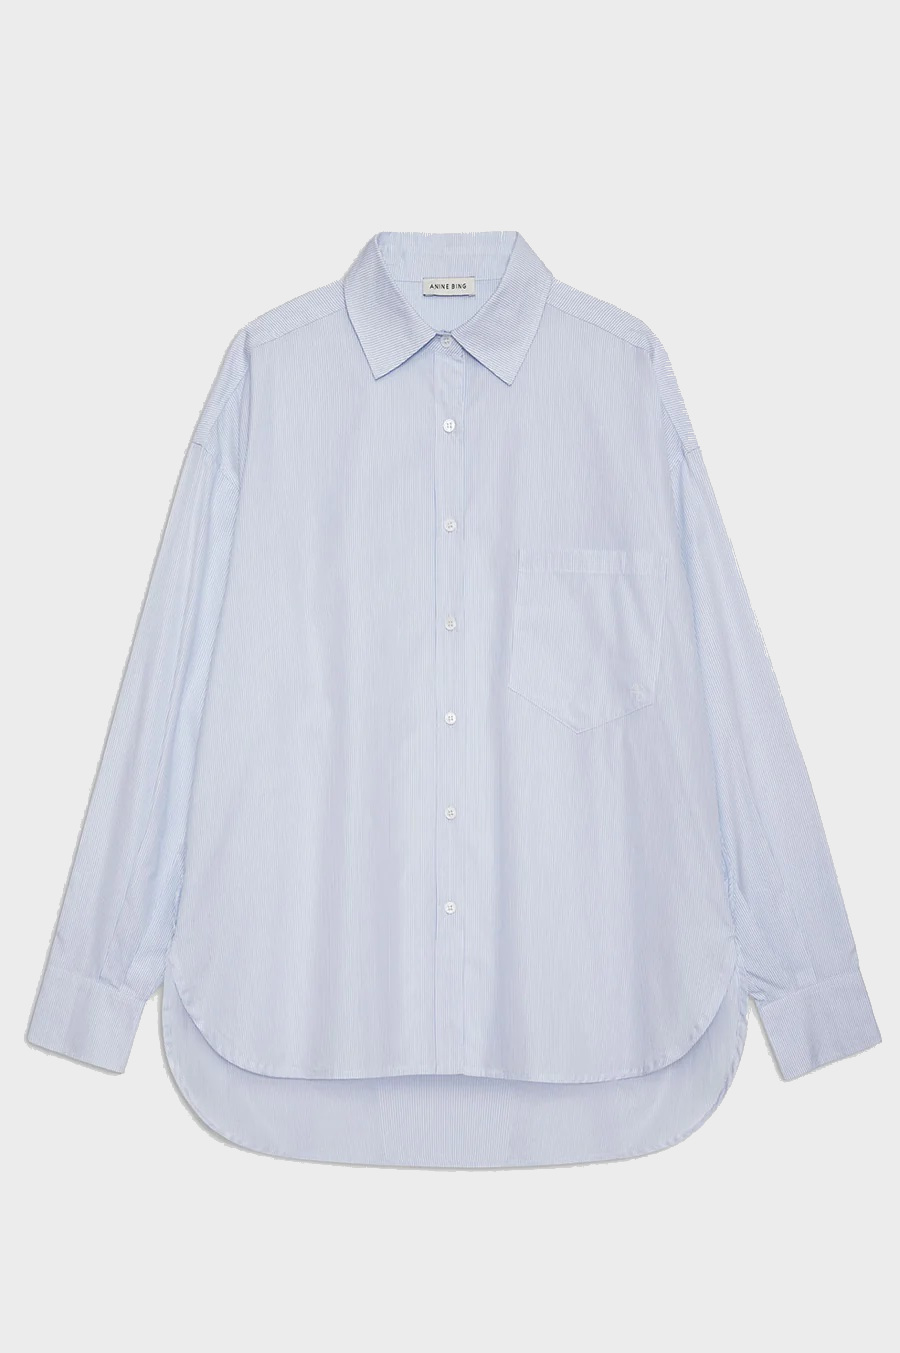 ANINE BING Chrissy Shirt in Blue/White Stripe